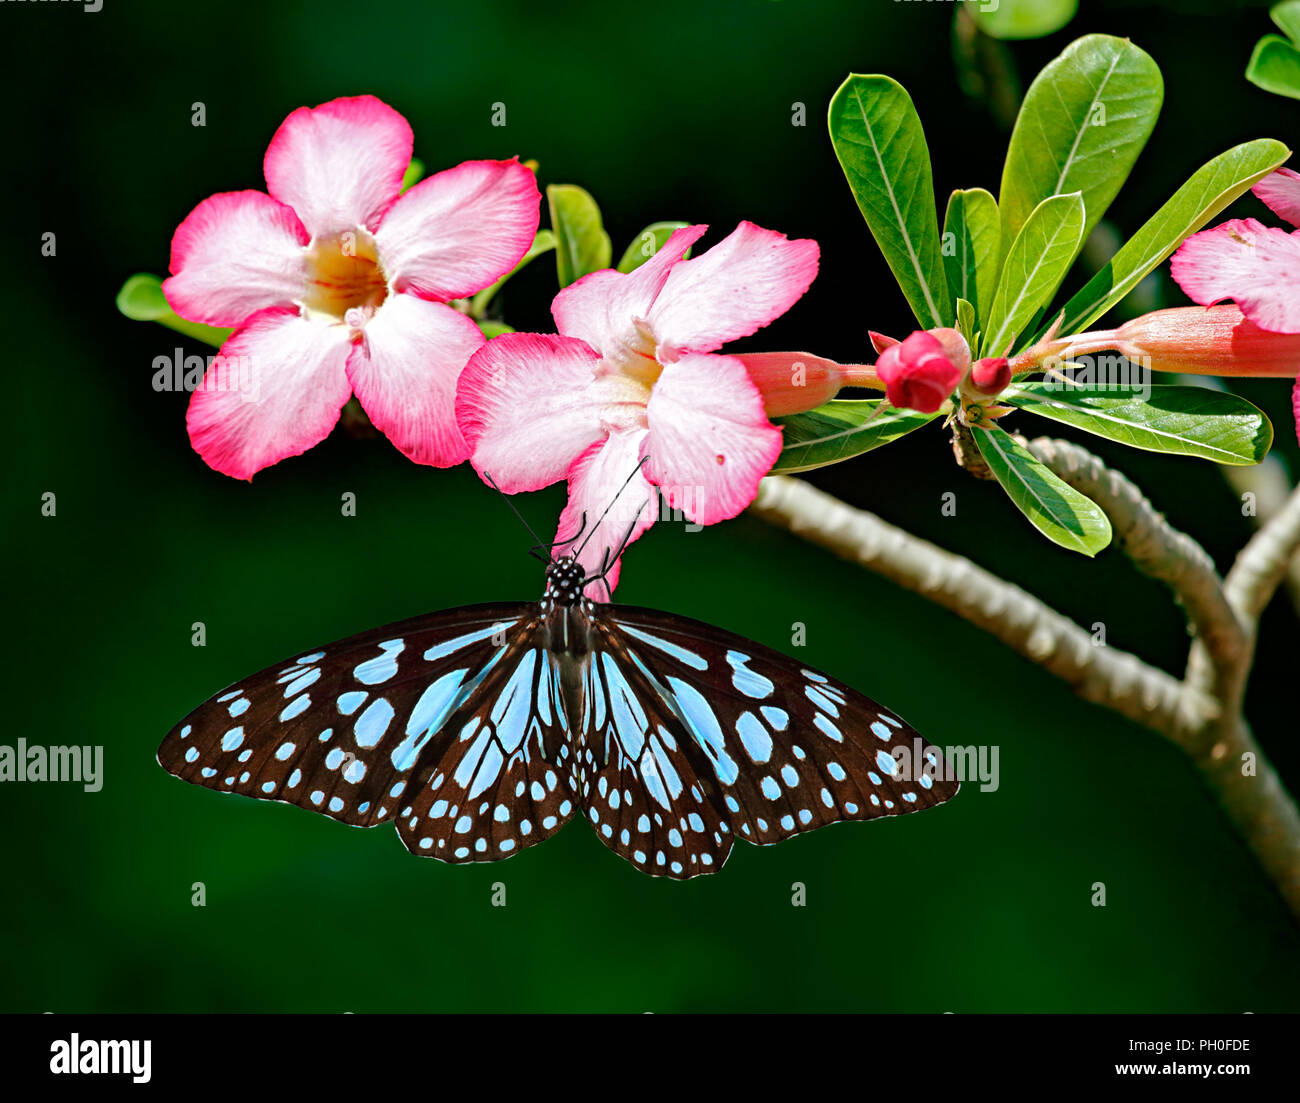 Tigre azul o mariposas Danaid Tirumala limniace sobre flores rosadas de Adenium Obesum o Sabi star o Desert Rose o simulacros de azalea con hojas verdes y da Foto de stock